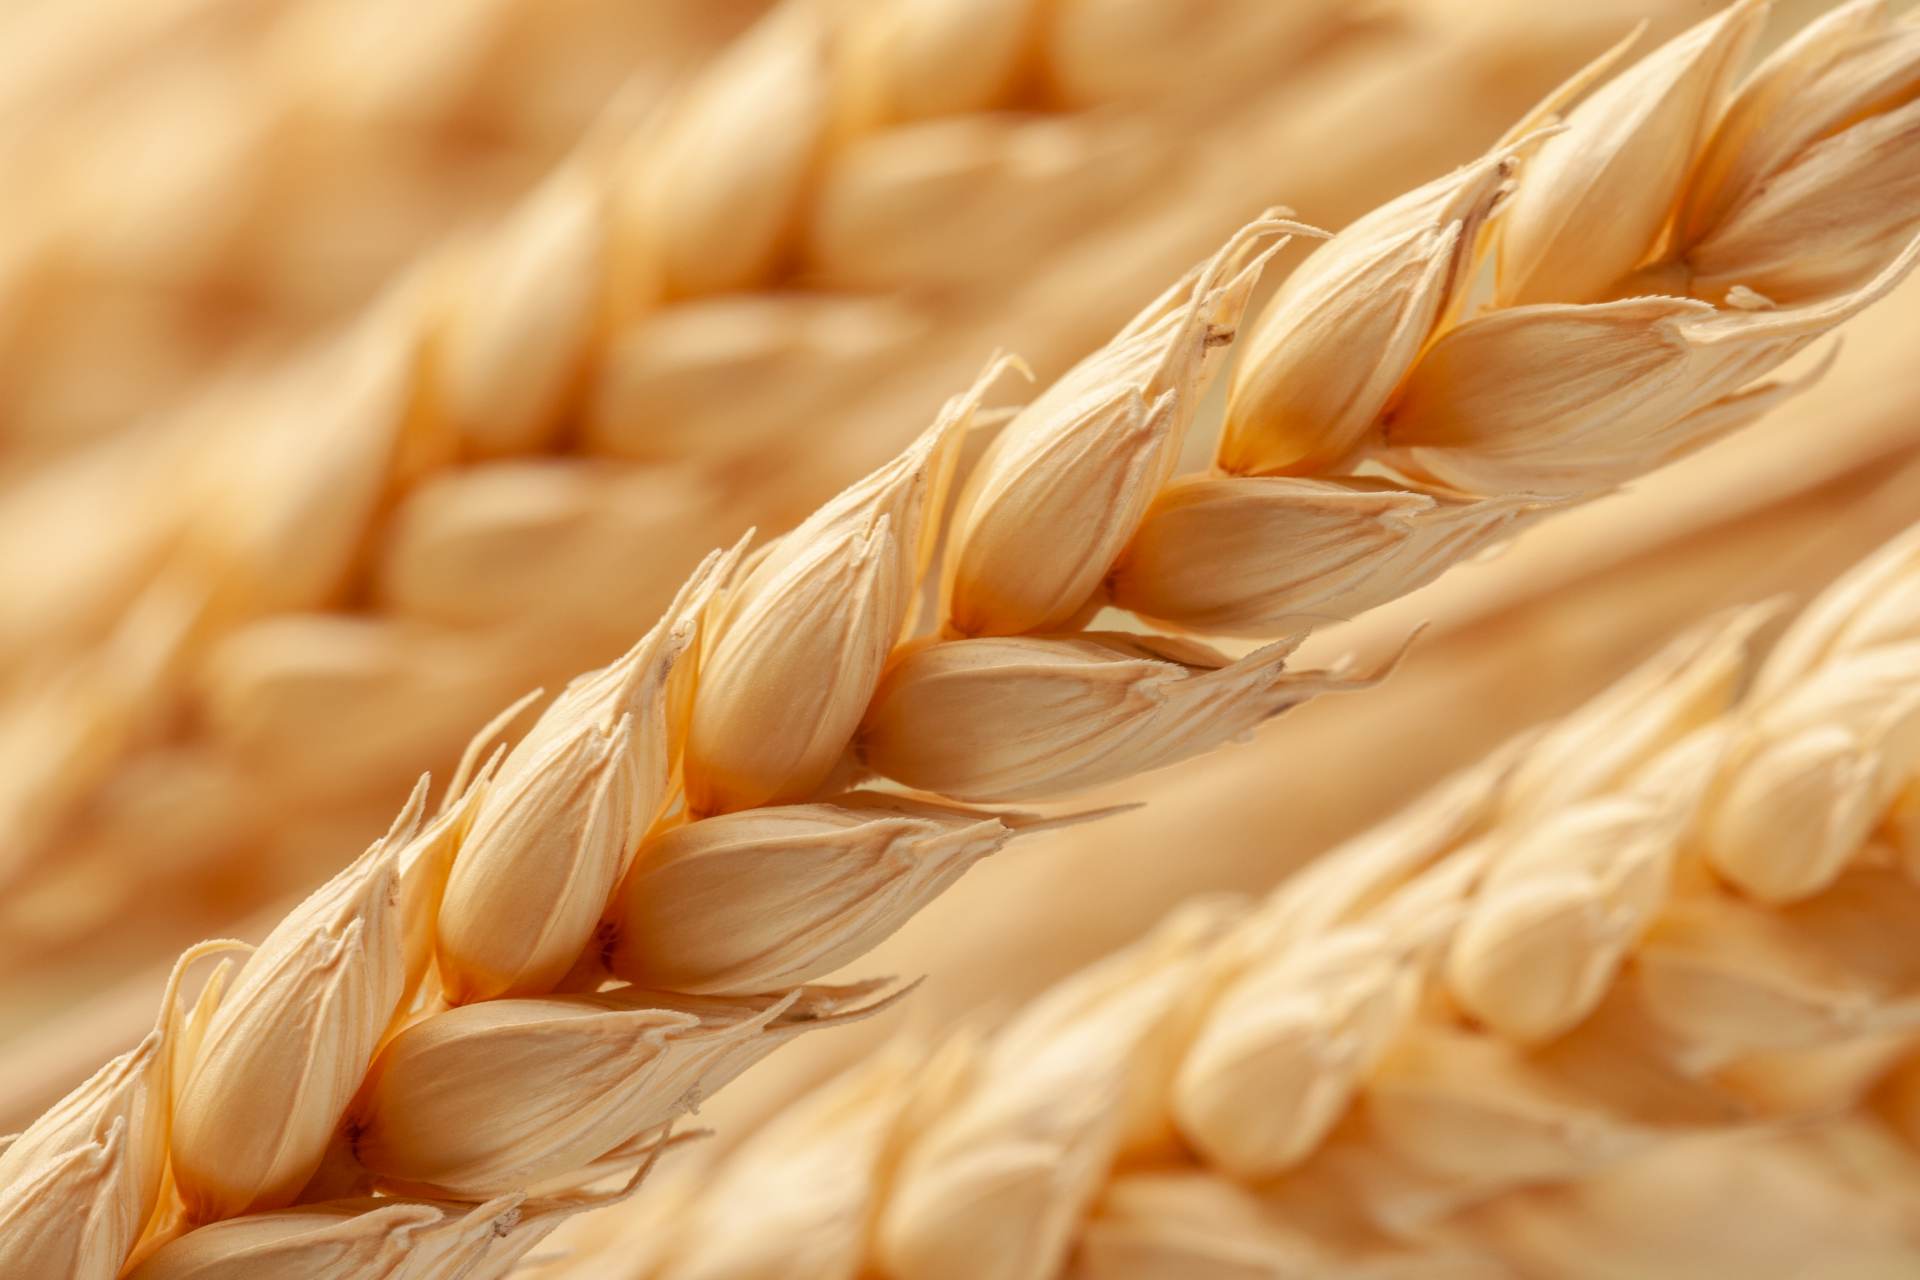  Svět Rusko Ukrajina komodity ceny pšenice 